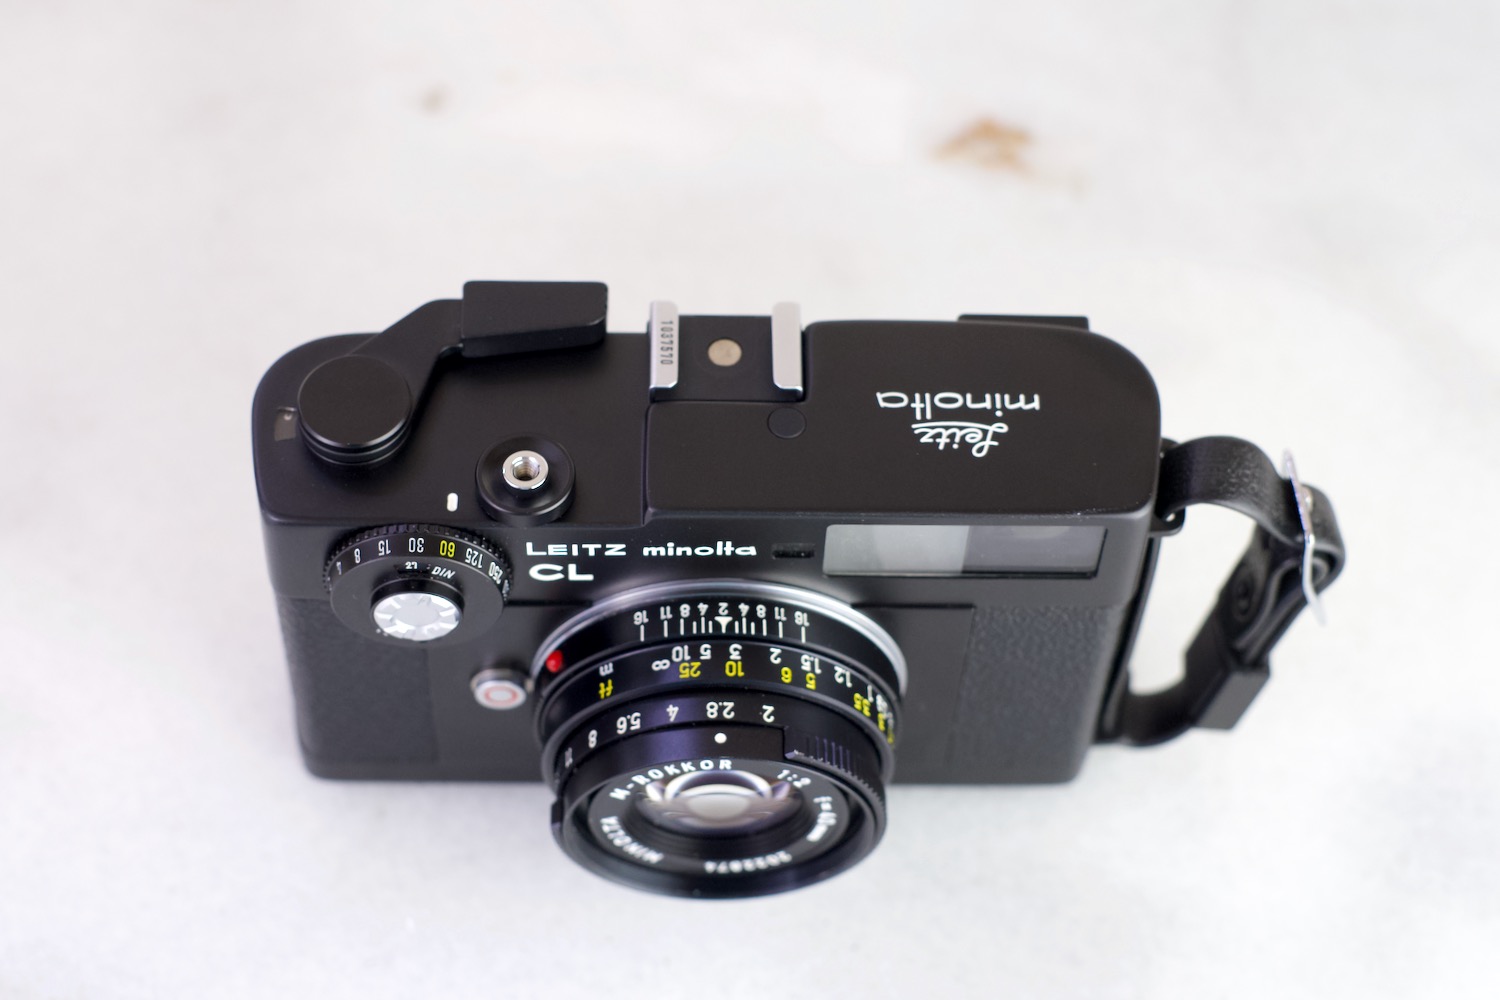 Leitz Minolta CL with Minolta M-Rokkor 40mm F/2 Lens, and Strap 